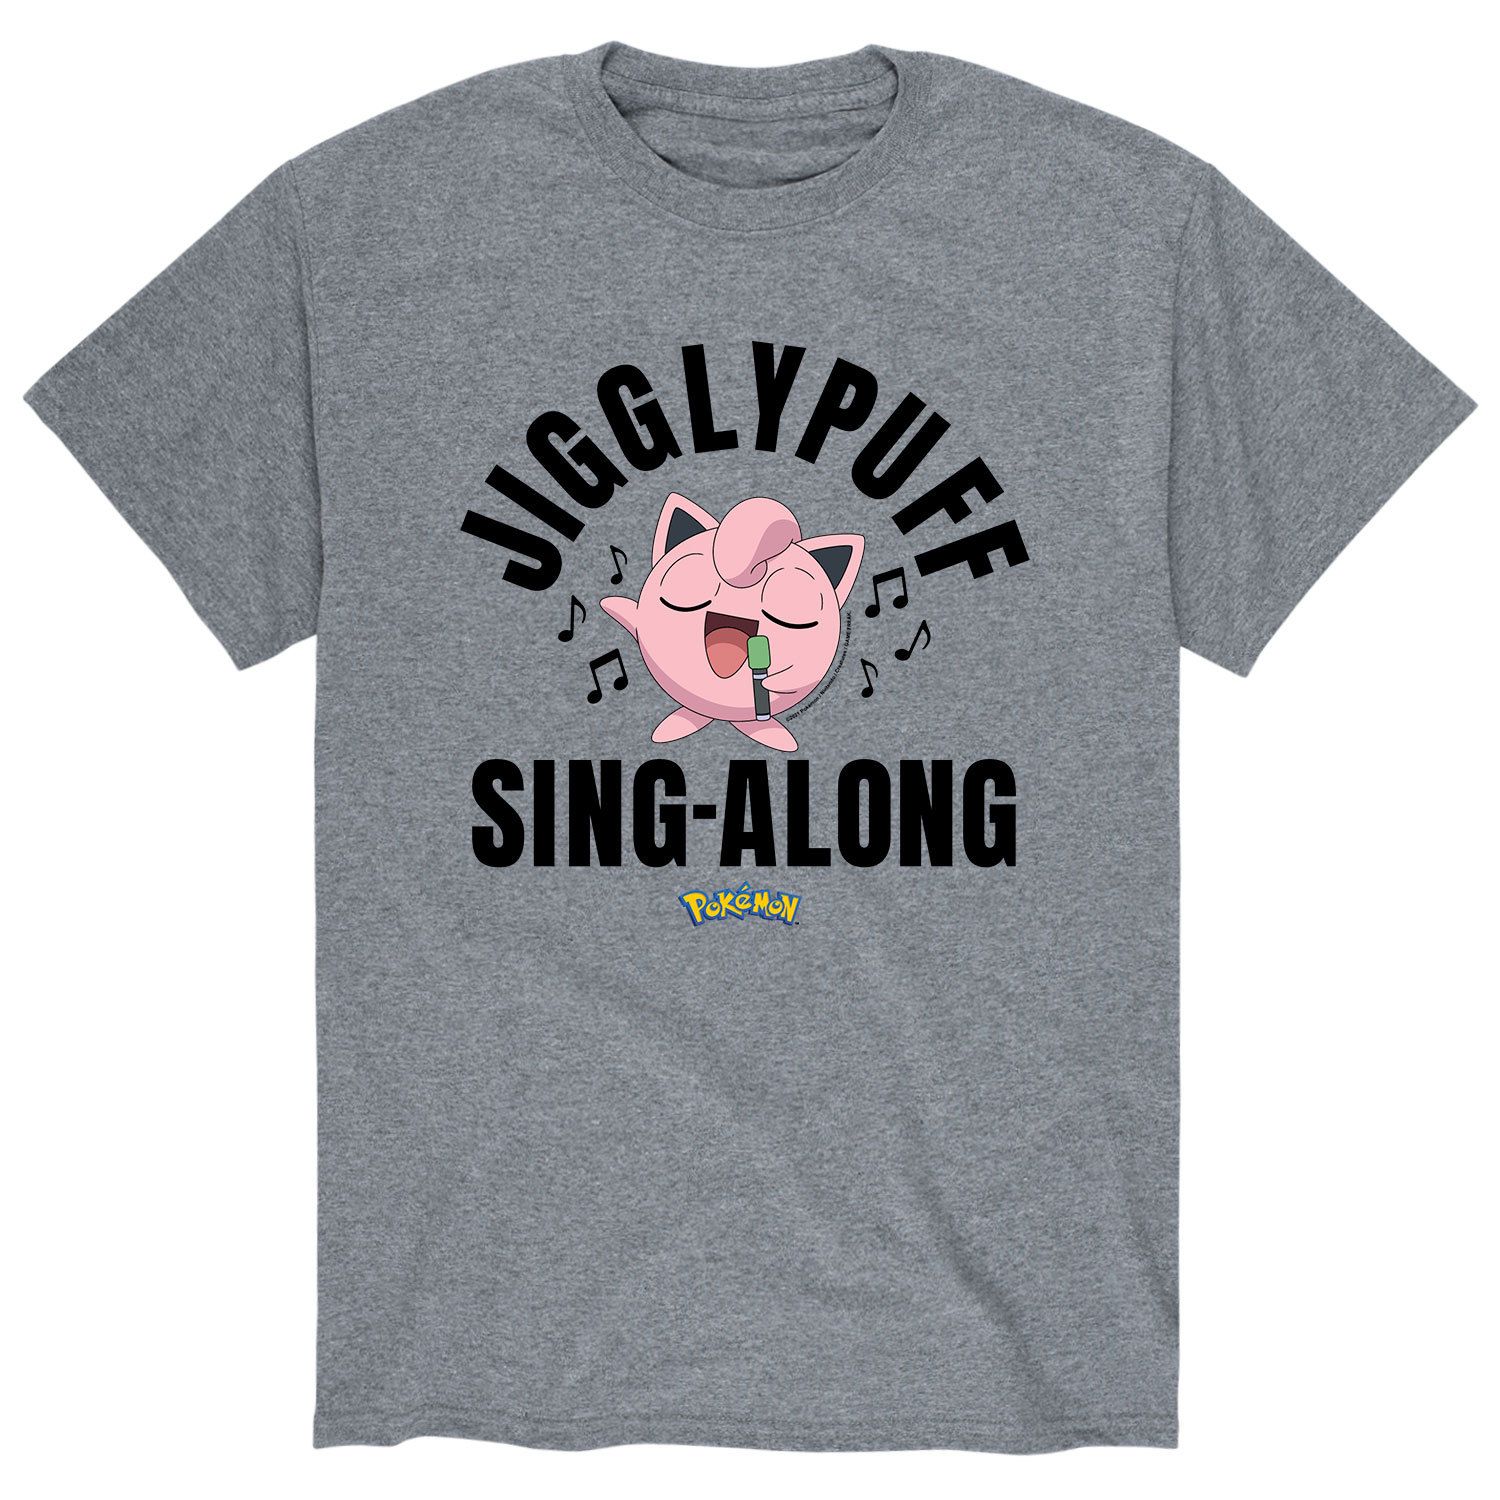 Мужская футболка с надписью Pokémon Jigglypuff Sing-Along Licensed Character набор pokemon футболка jigglypuff sing женская белая l стикерпак pika 2